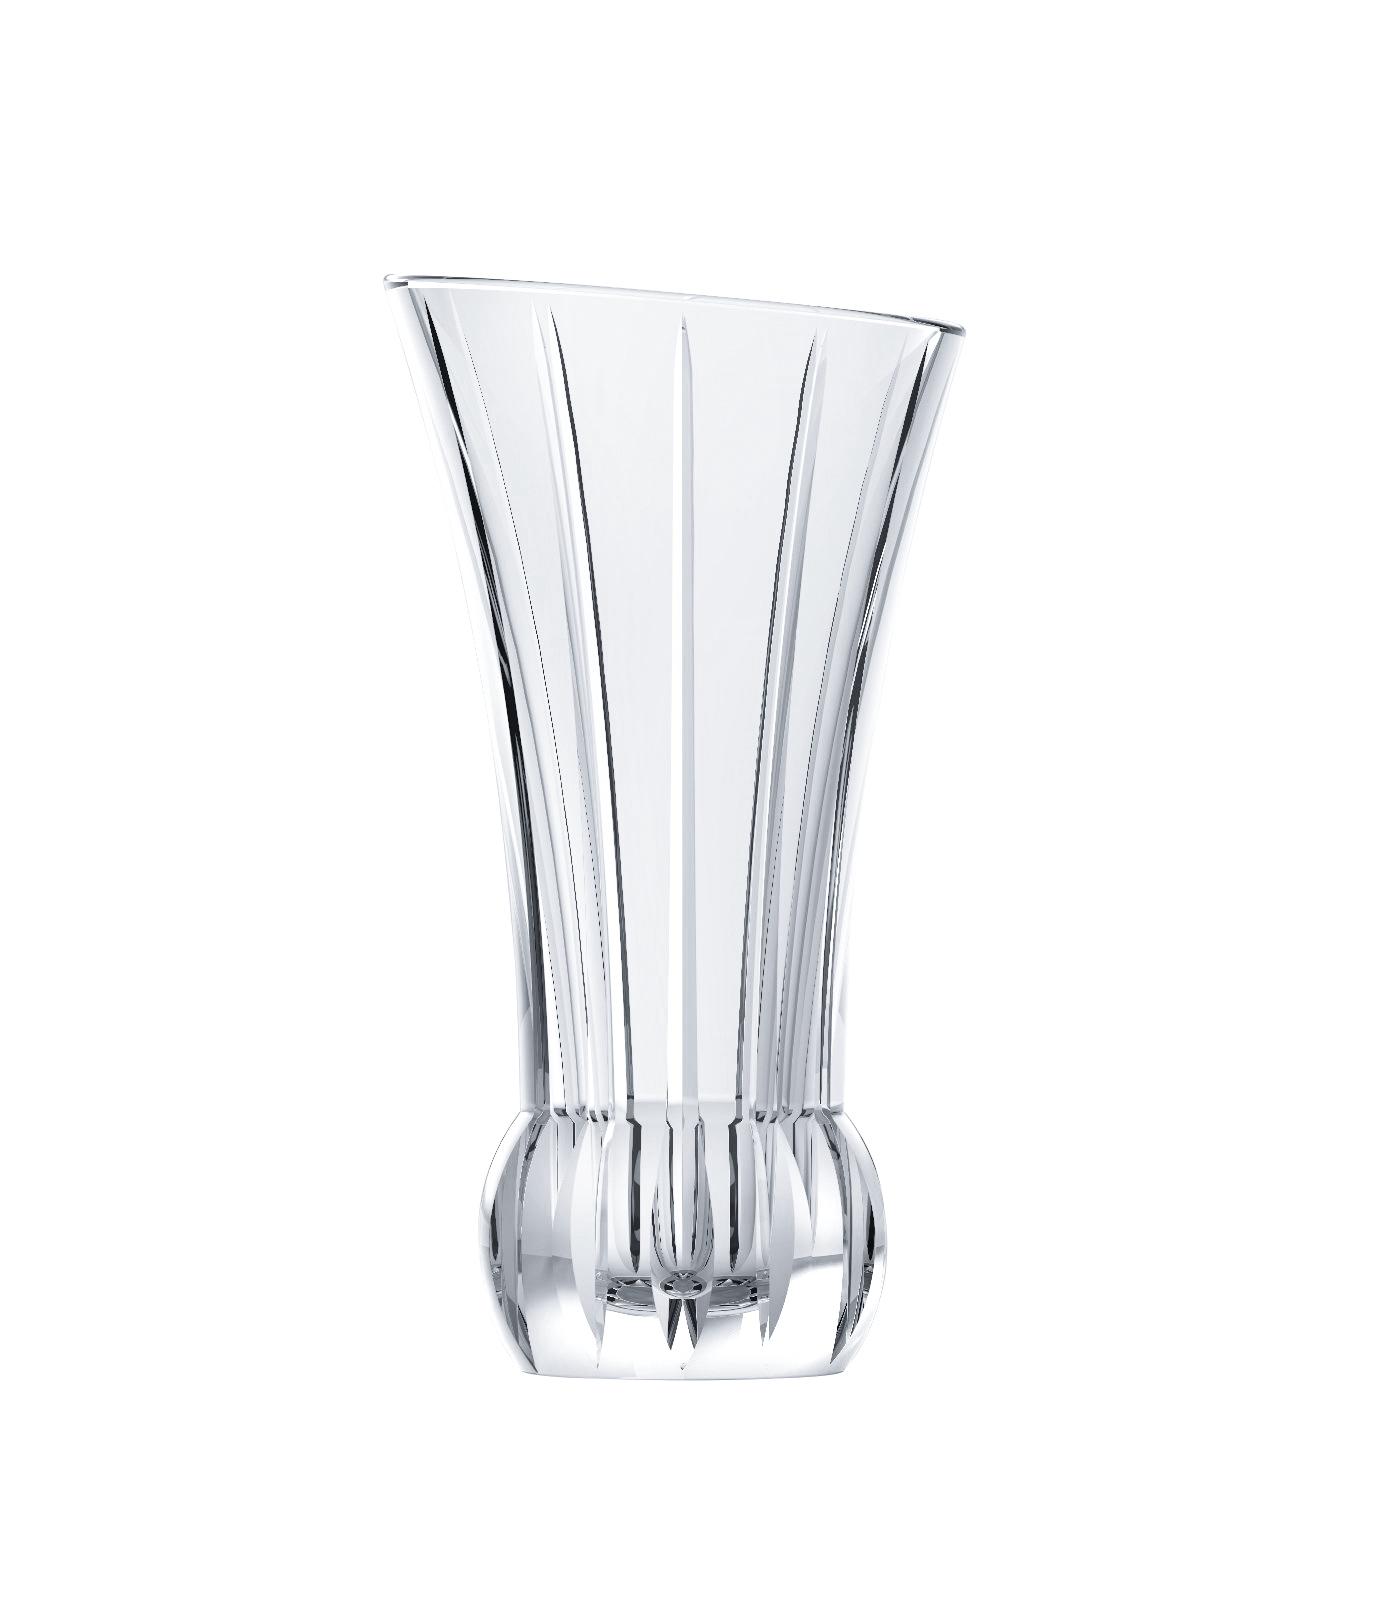 Vase Spring, 3 Stück - Klar, MODERN, Glas (7,2/13,6/7,2cm) - Nachtmann